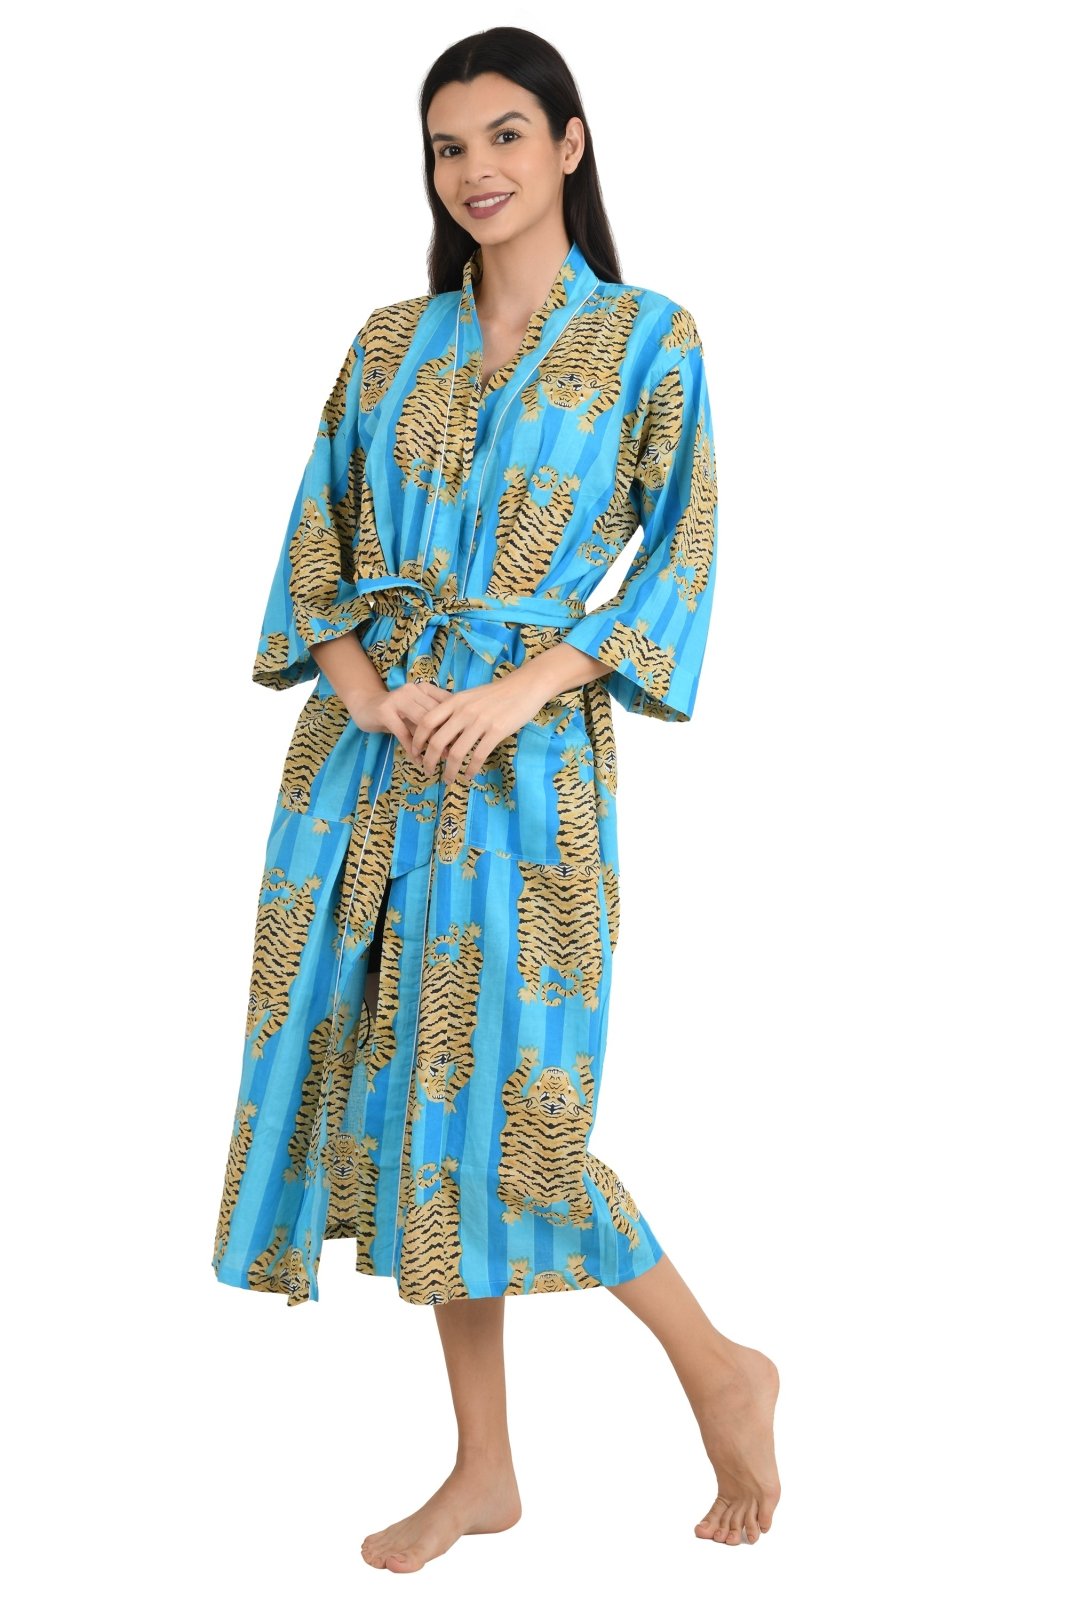 Cotton Kimono House Robe Indian Handprinted Strips Cheetah Print Pattern | Lightweight Summer Luxury Beach Holidays Yacht Cover Up Stunning Dress - The Eastern Loom